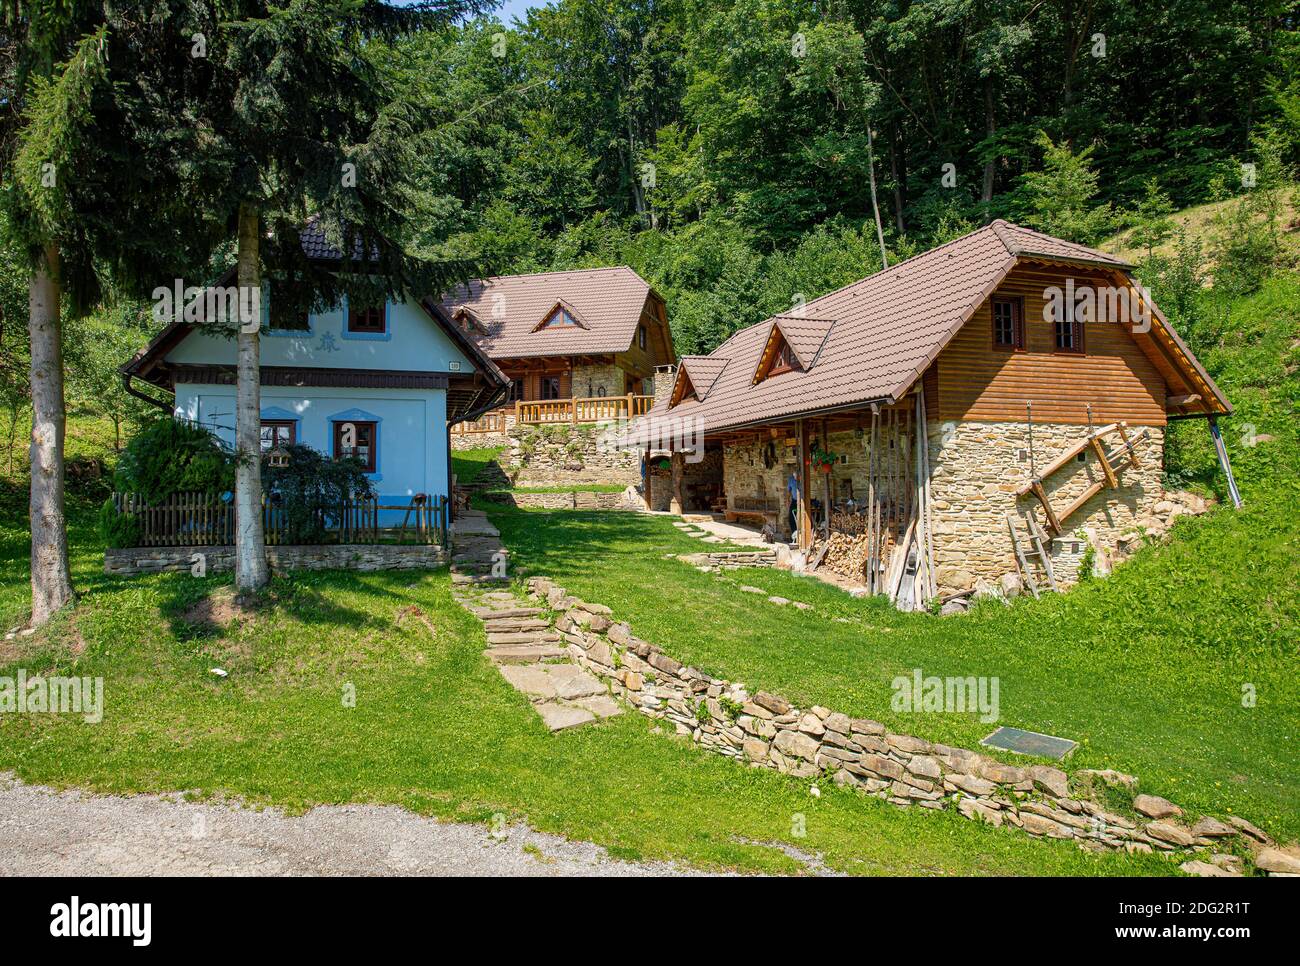 Old stone farmhouse with tile roof in White Carpathian mountains, Slovakia Stock Photo